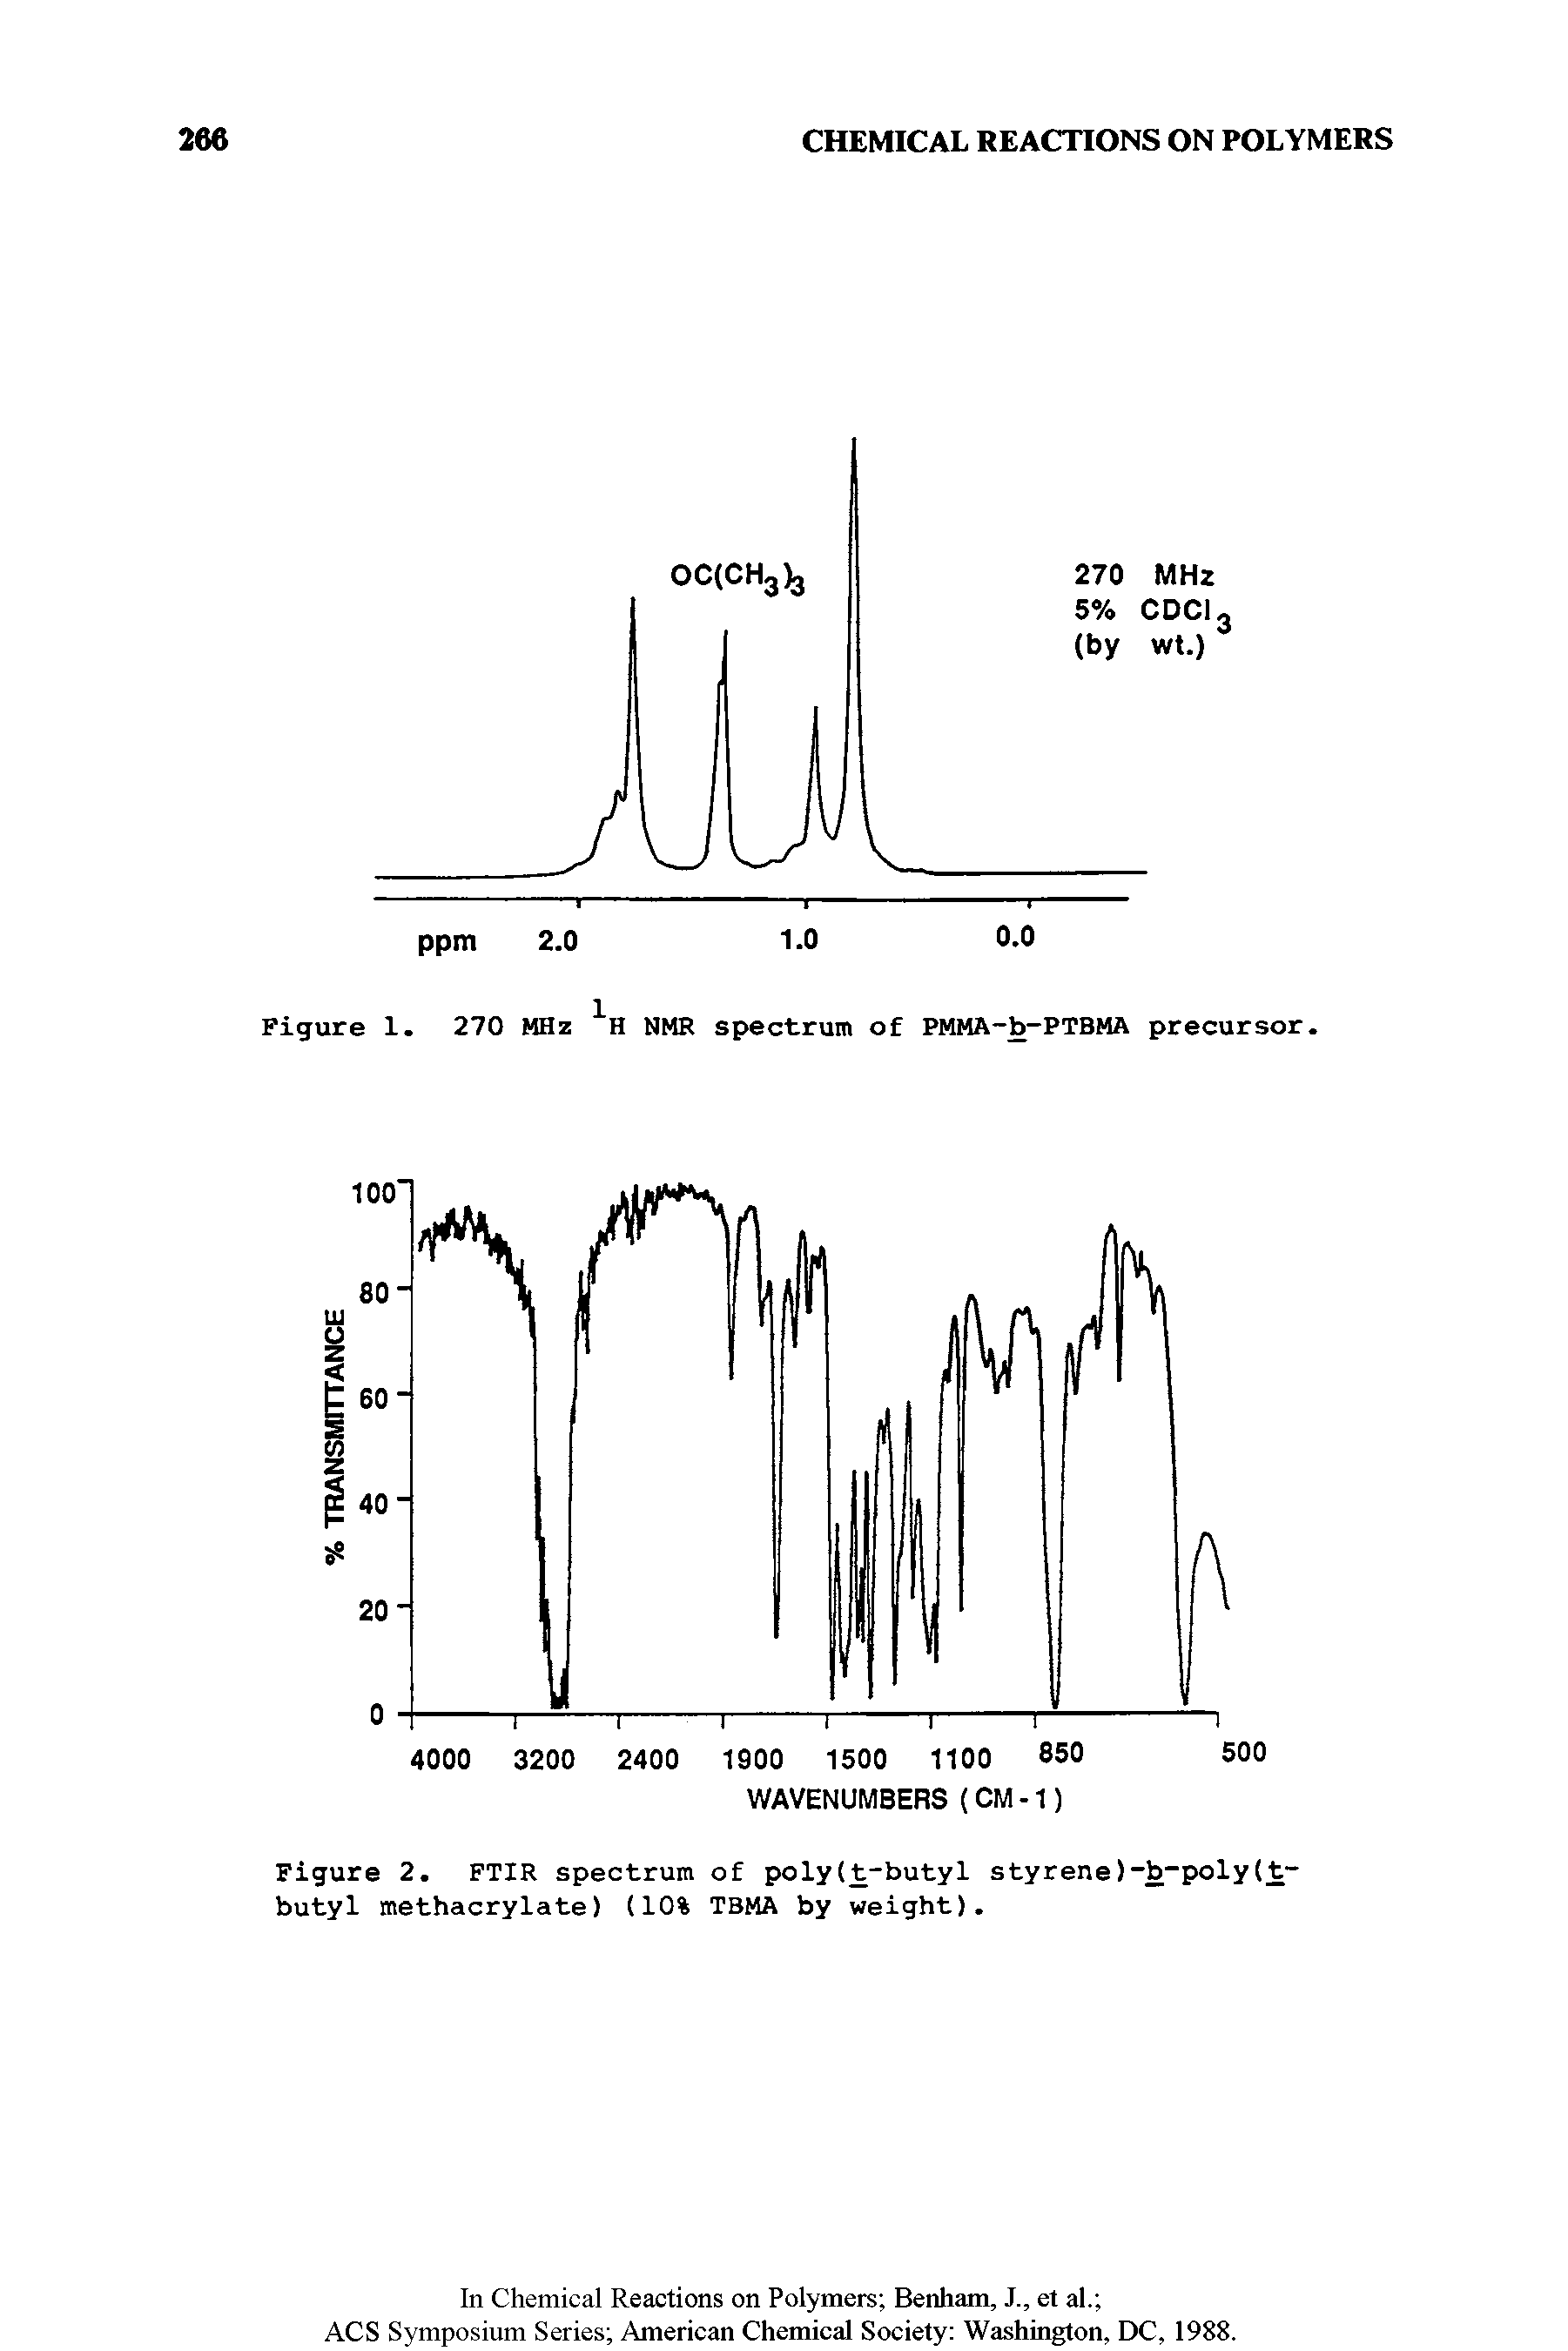 Figure 2. FTIR spectrum of poly(t-butyl styrene)-b-poly(t-butyl methacrylate) (10% TBMA by weight).